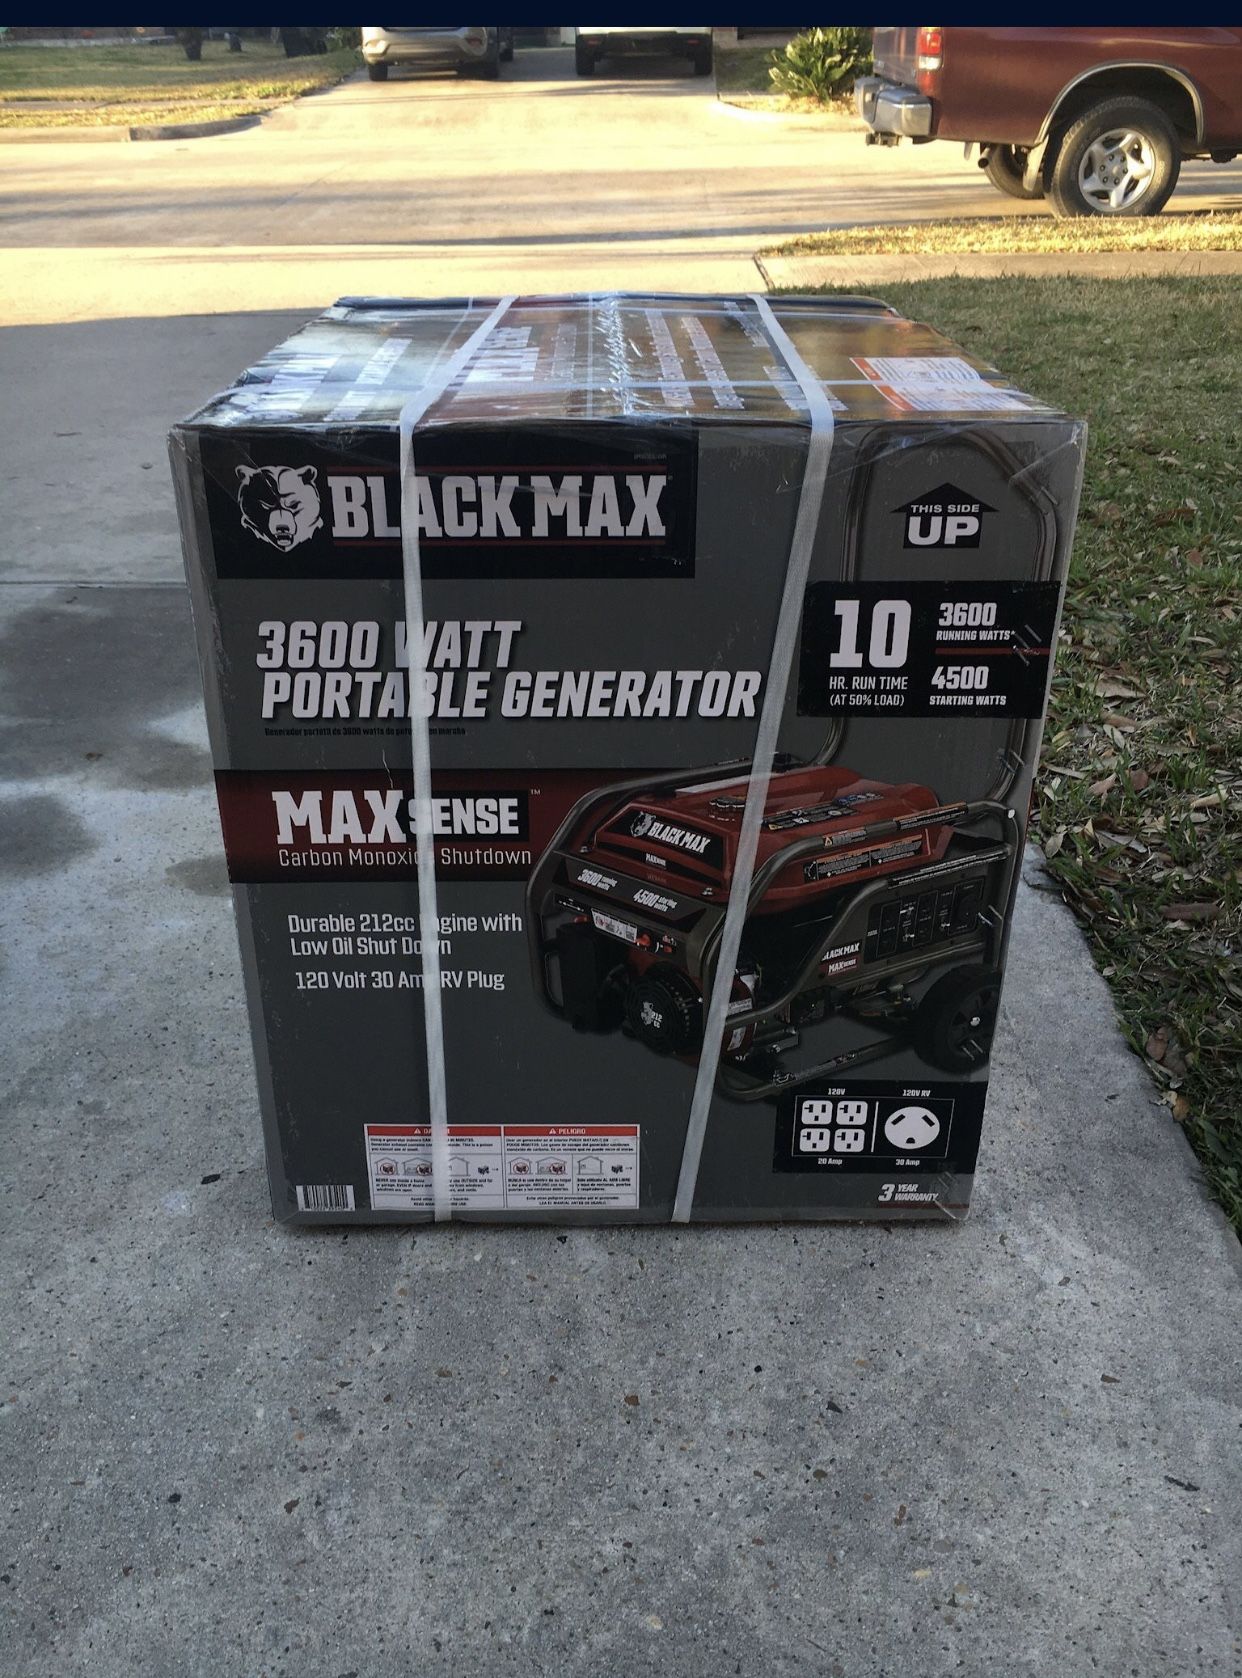 Blackmax 4500 Starting Watts 3600 Running Watts New In Box Nueva En Caja $350 Firm Price 